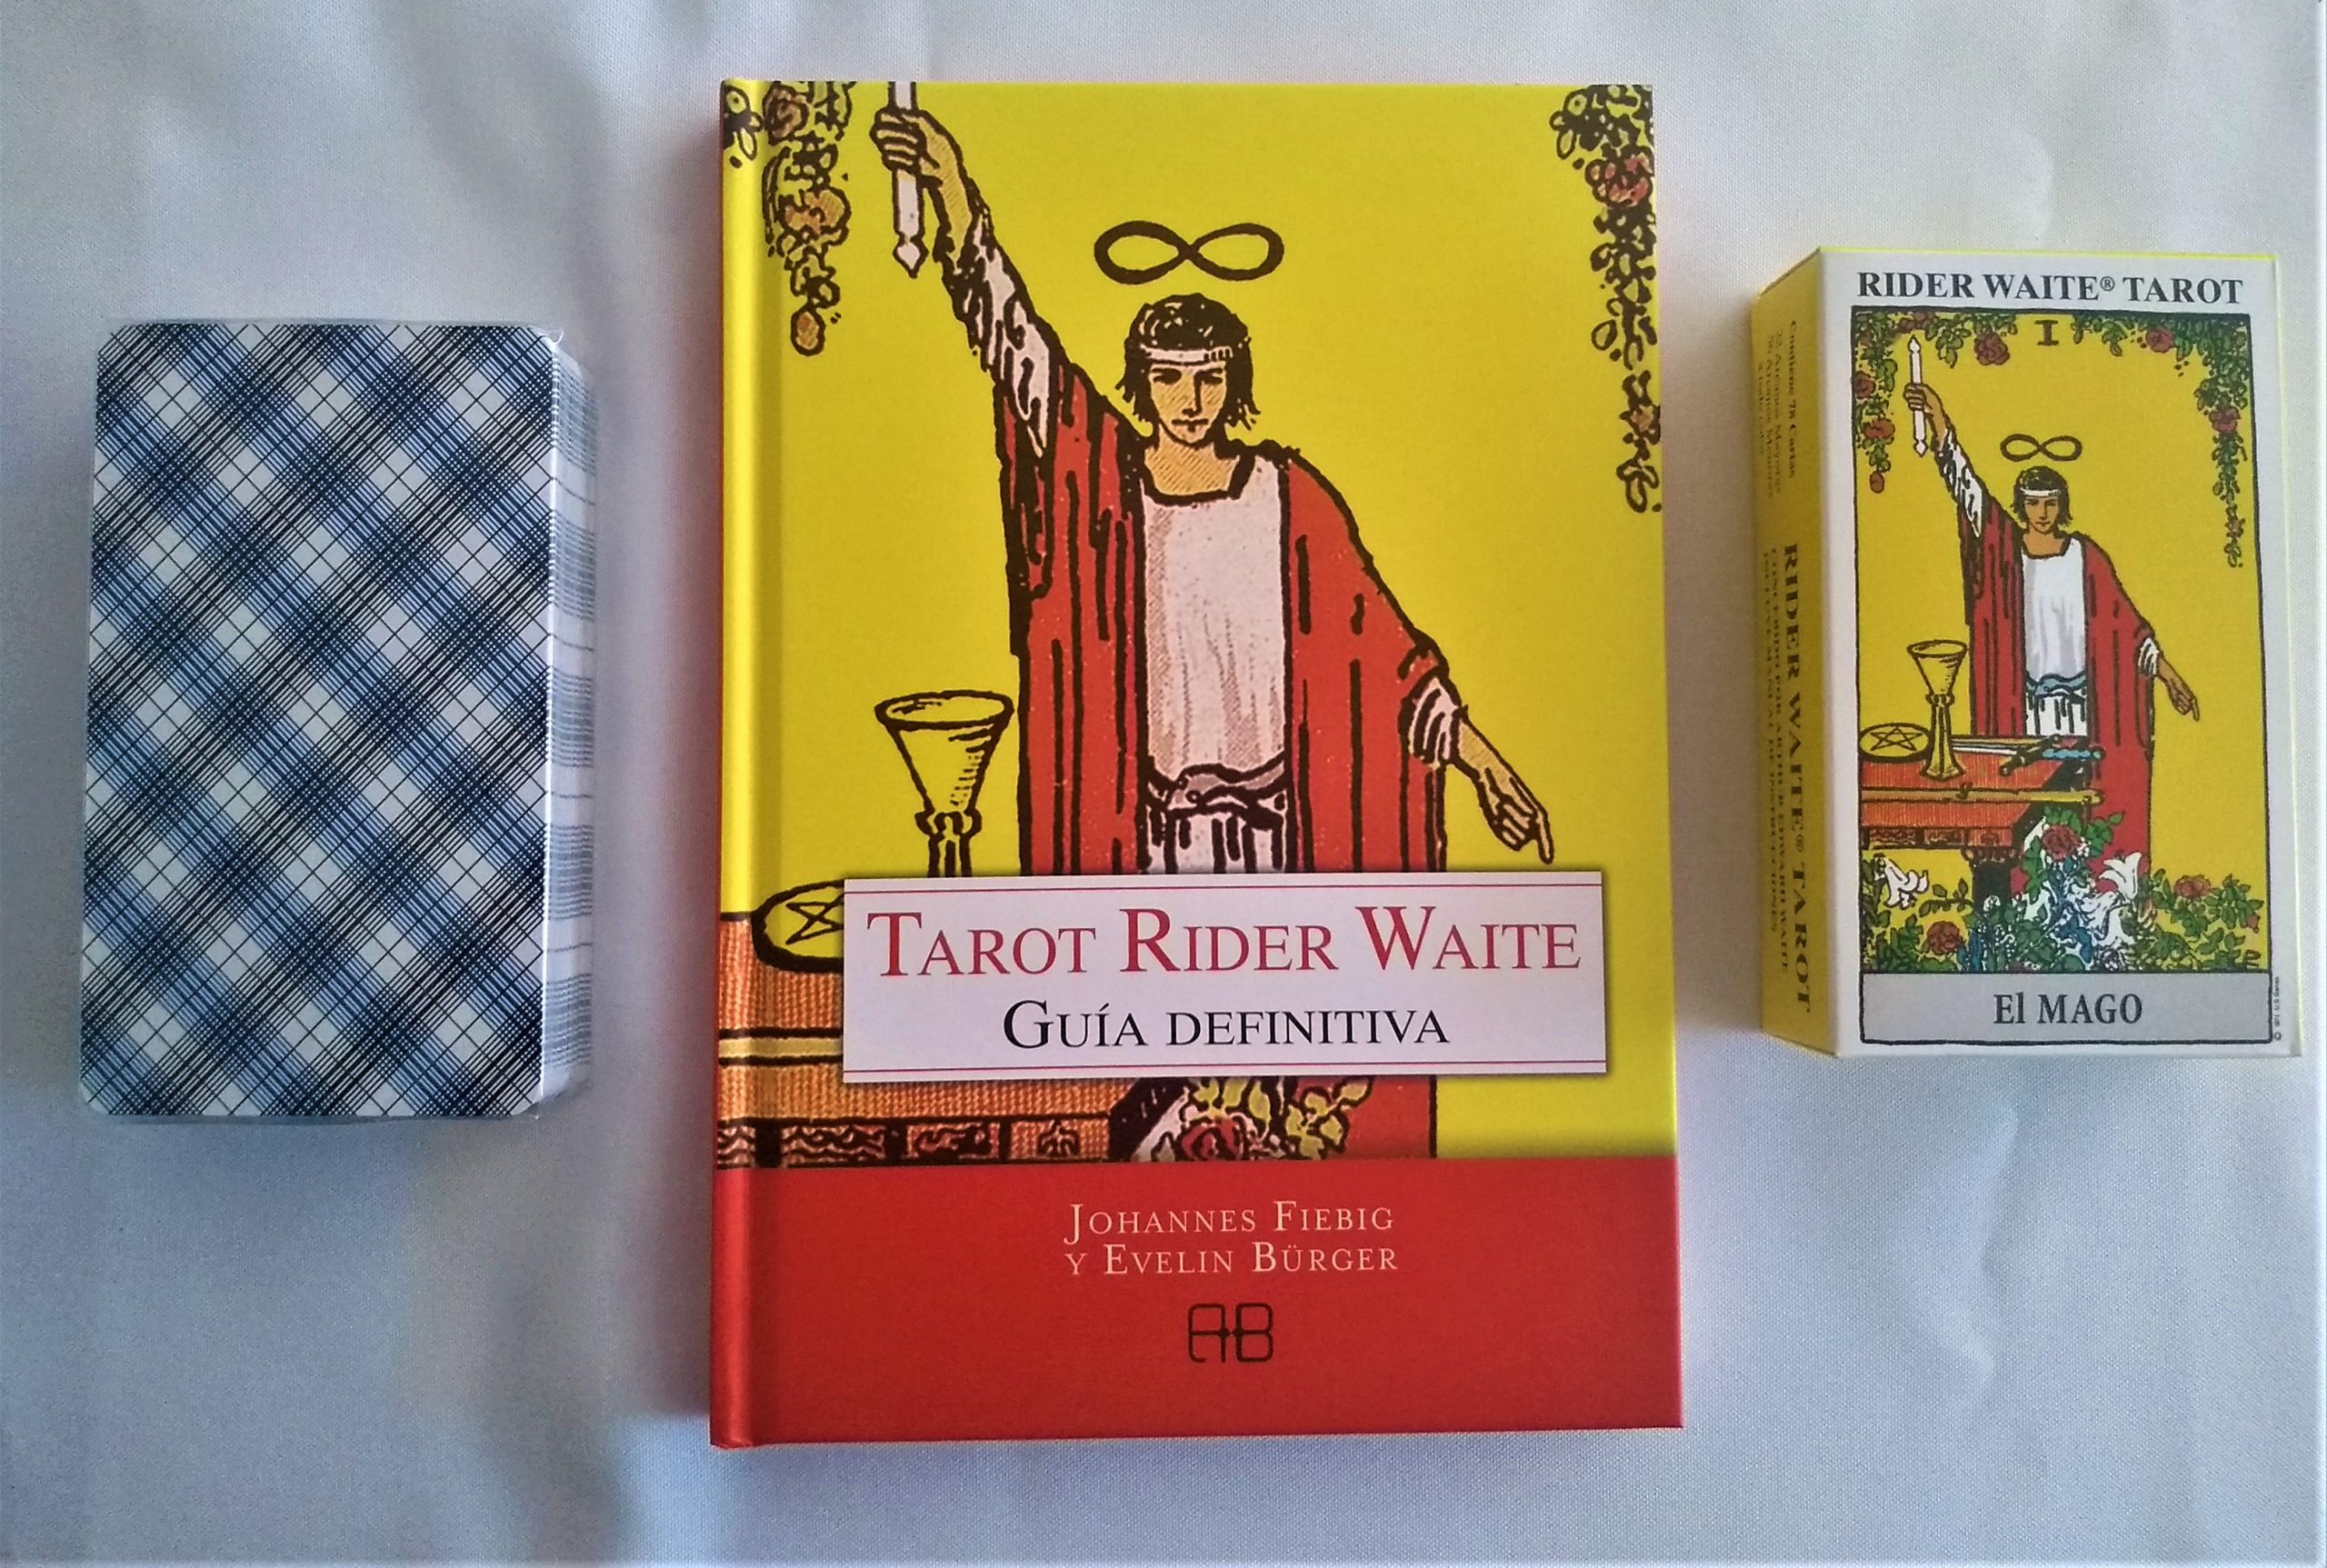 Tarot Rider Waite en español